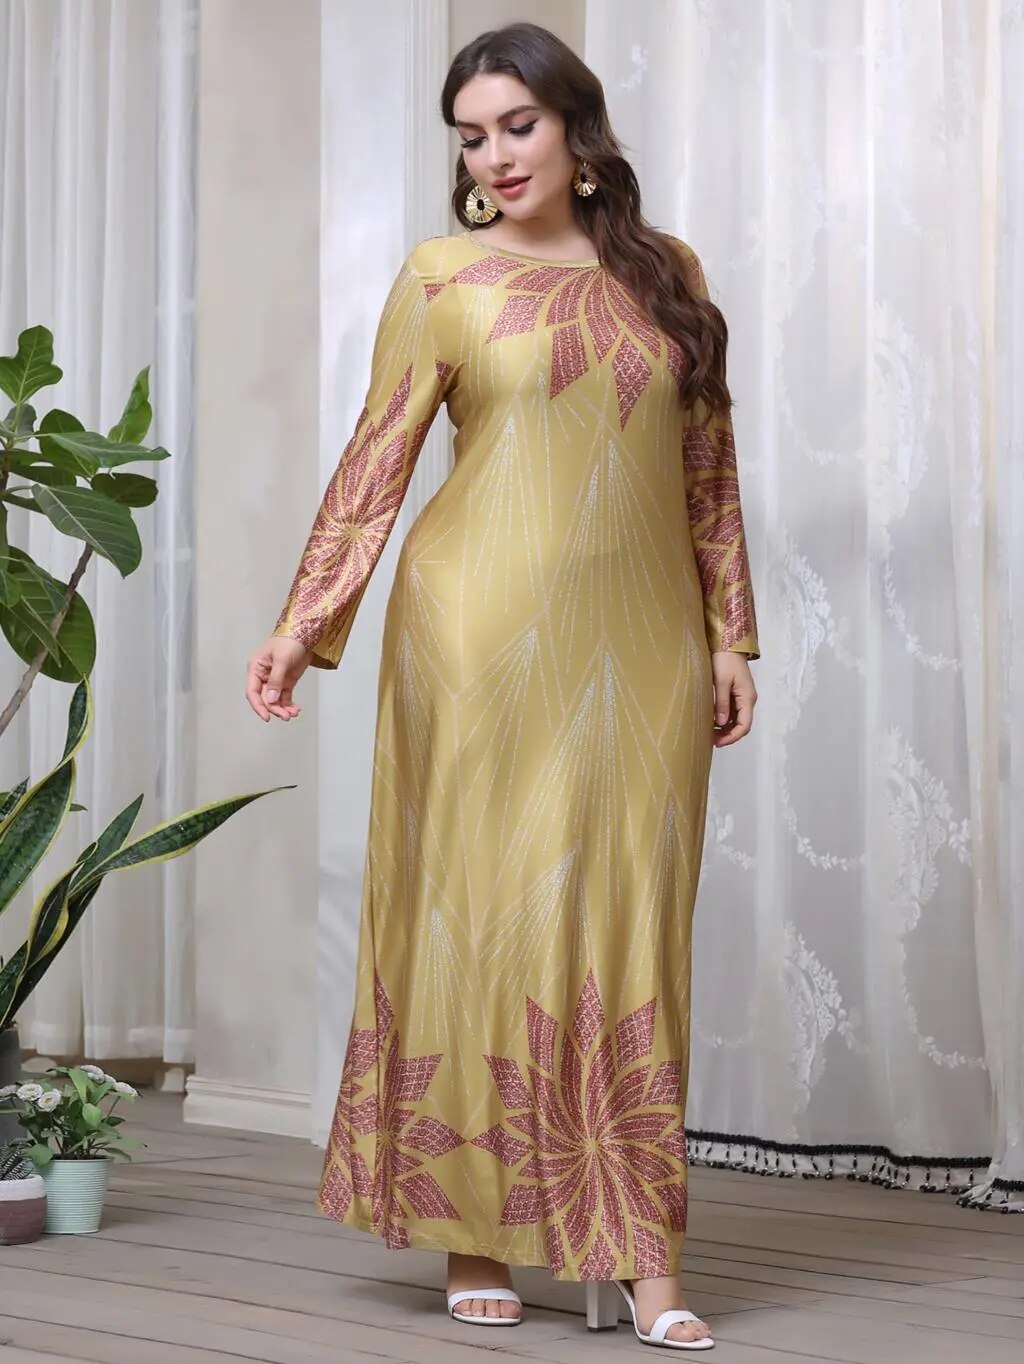 Winter Dress Woman Long Sleeve Retro Floral Printing Vintage Luxury Abaya Dubai Muslim Dress-dresses-Top Super Deals-Free Item Online